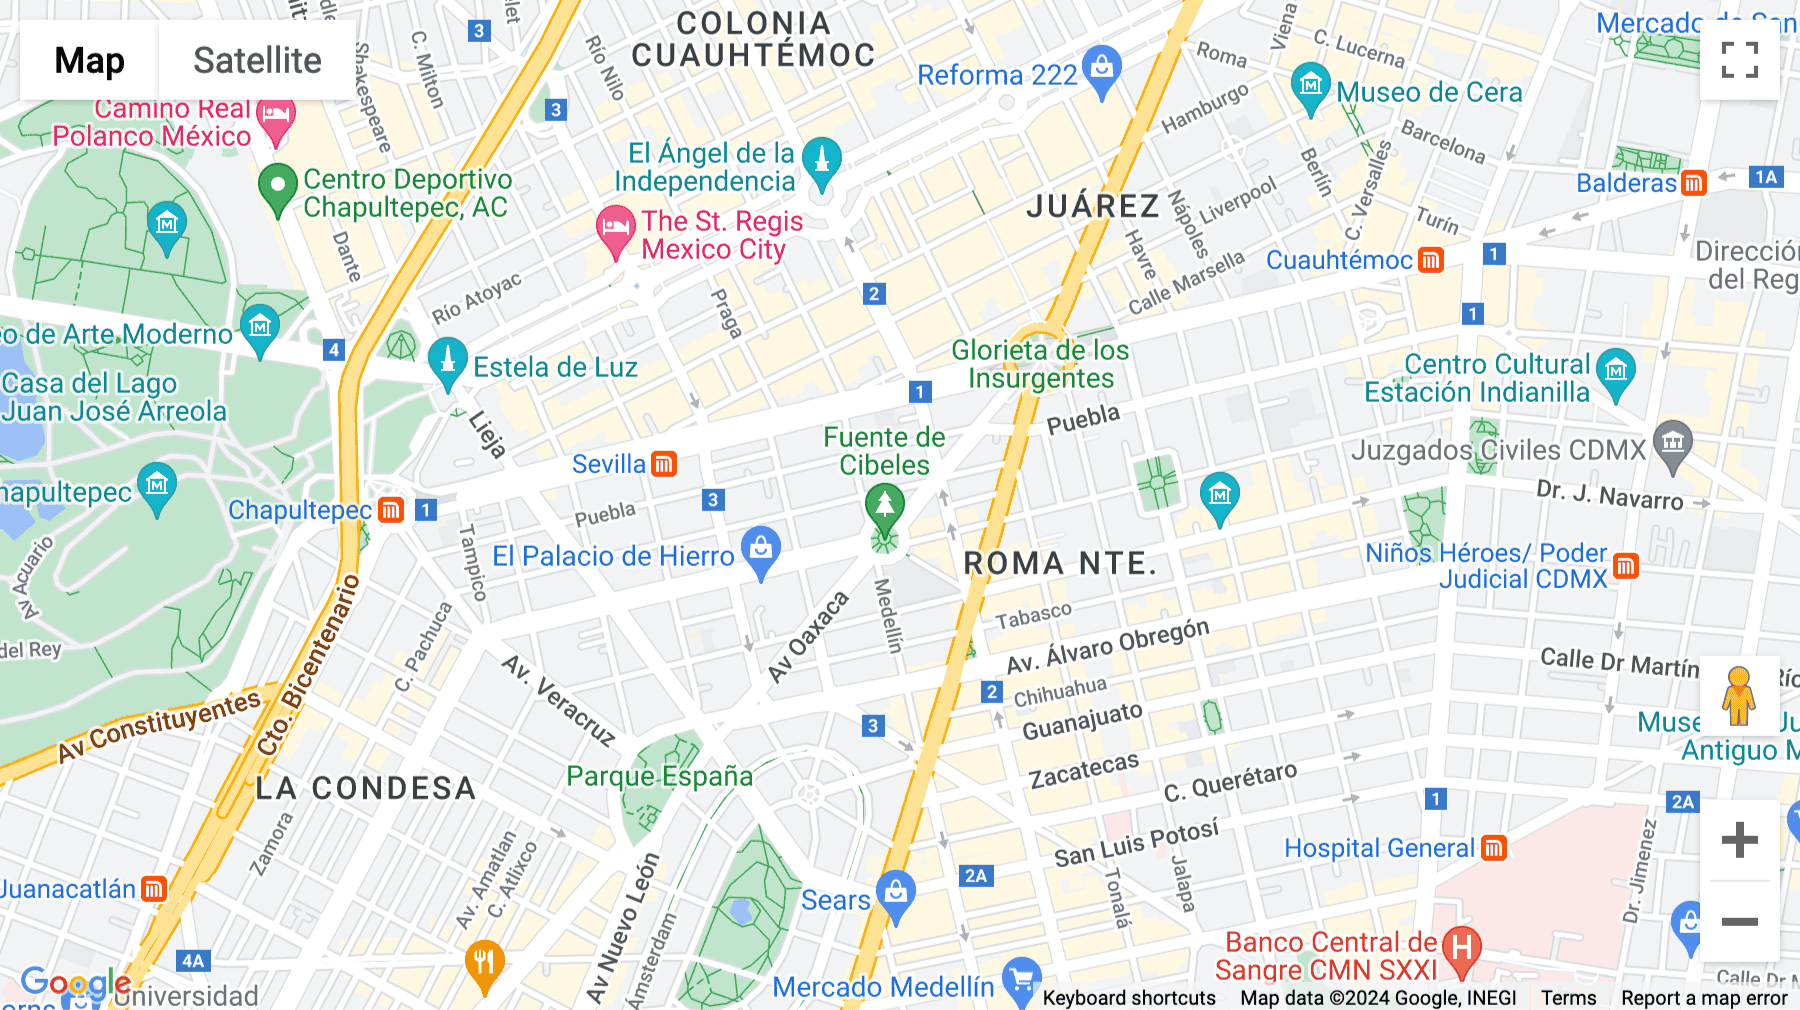 Click for interative map of Plaza Villa Madrid no. 1, Roma Norte, Cuauhtémoc, Mexico City